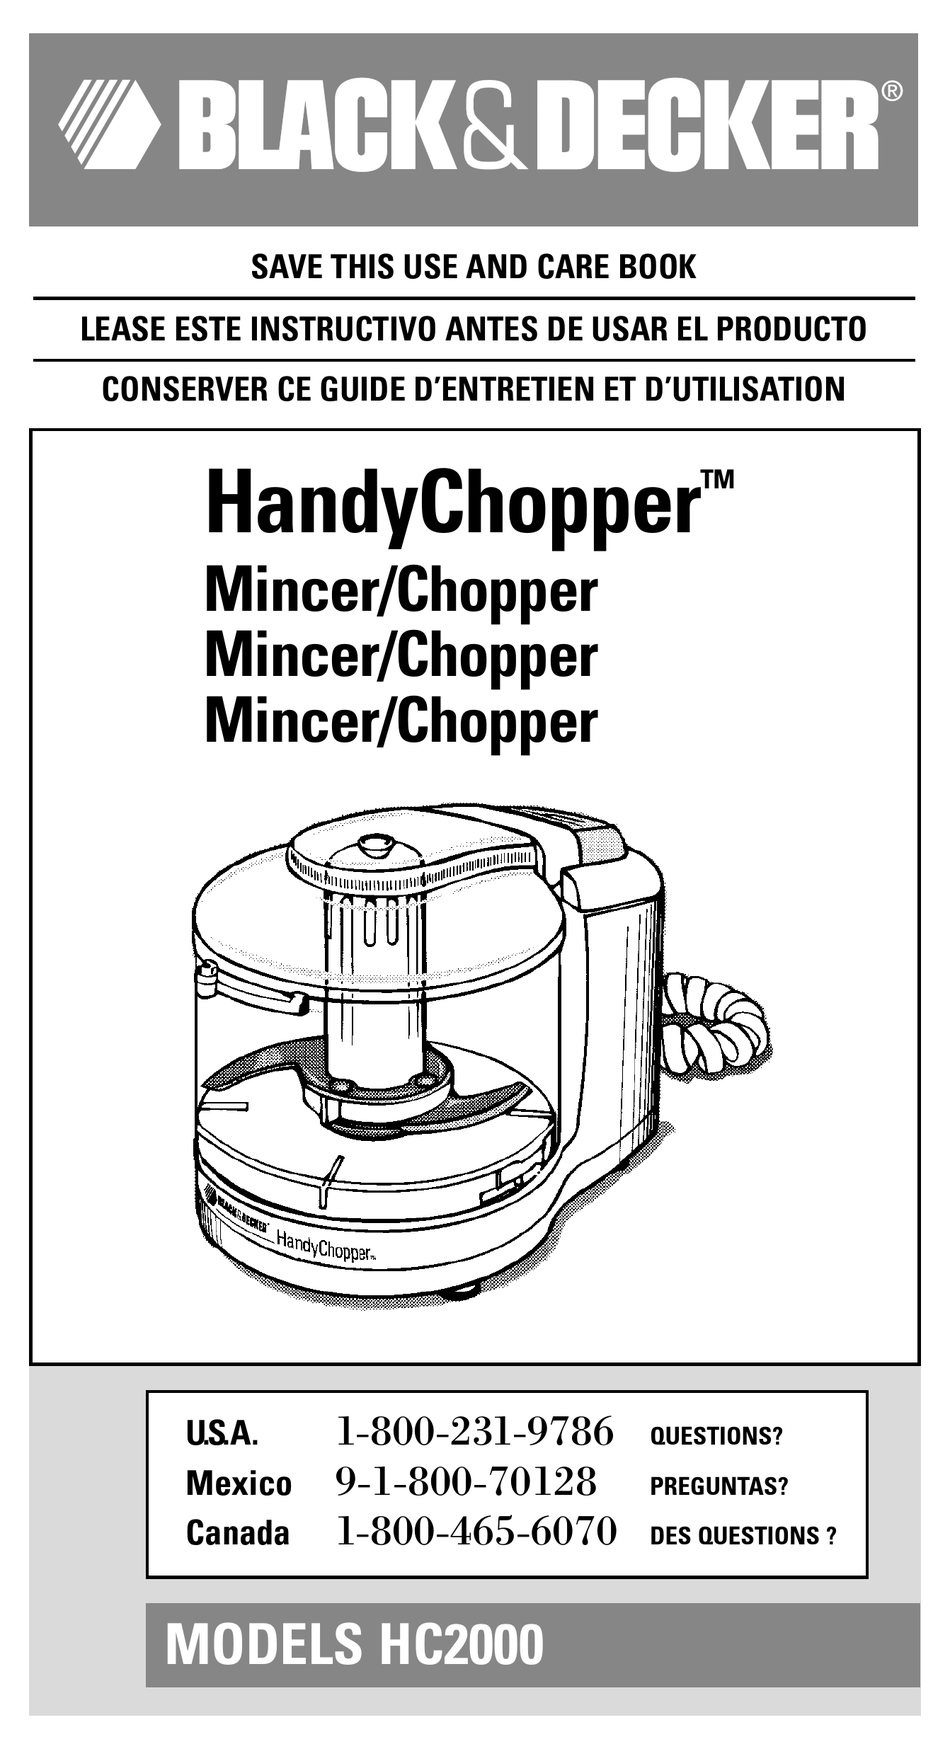 BLACK & DECKER HANDYCHOPPER HC2000 USE AND CARE BOOK MANUAL Pdf Download